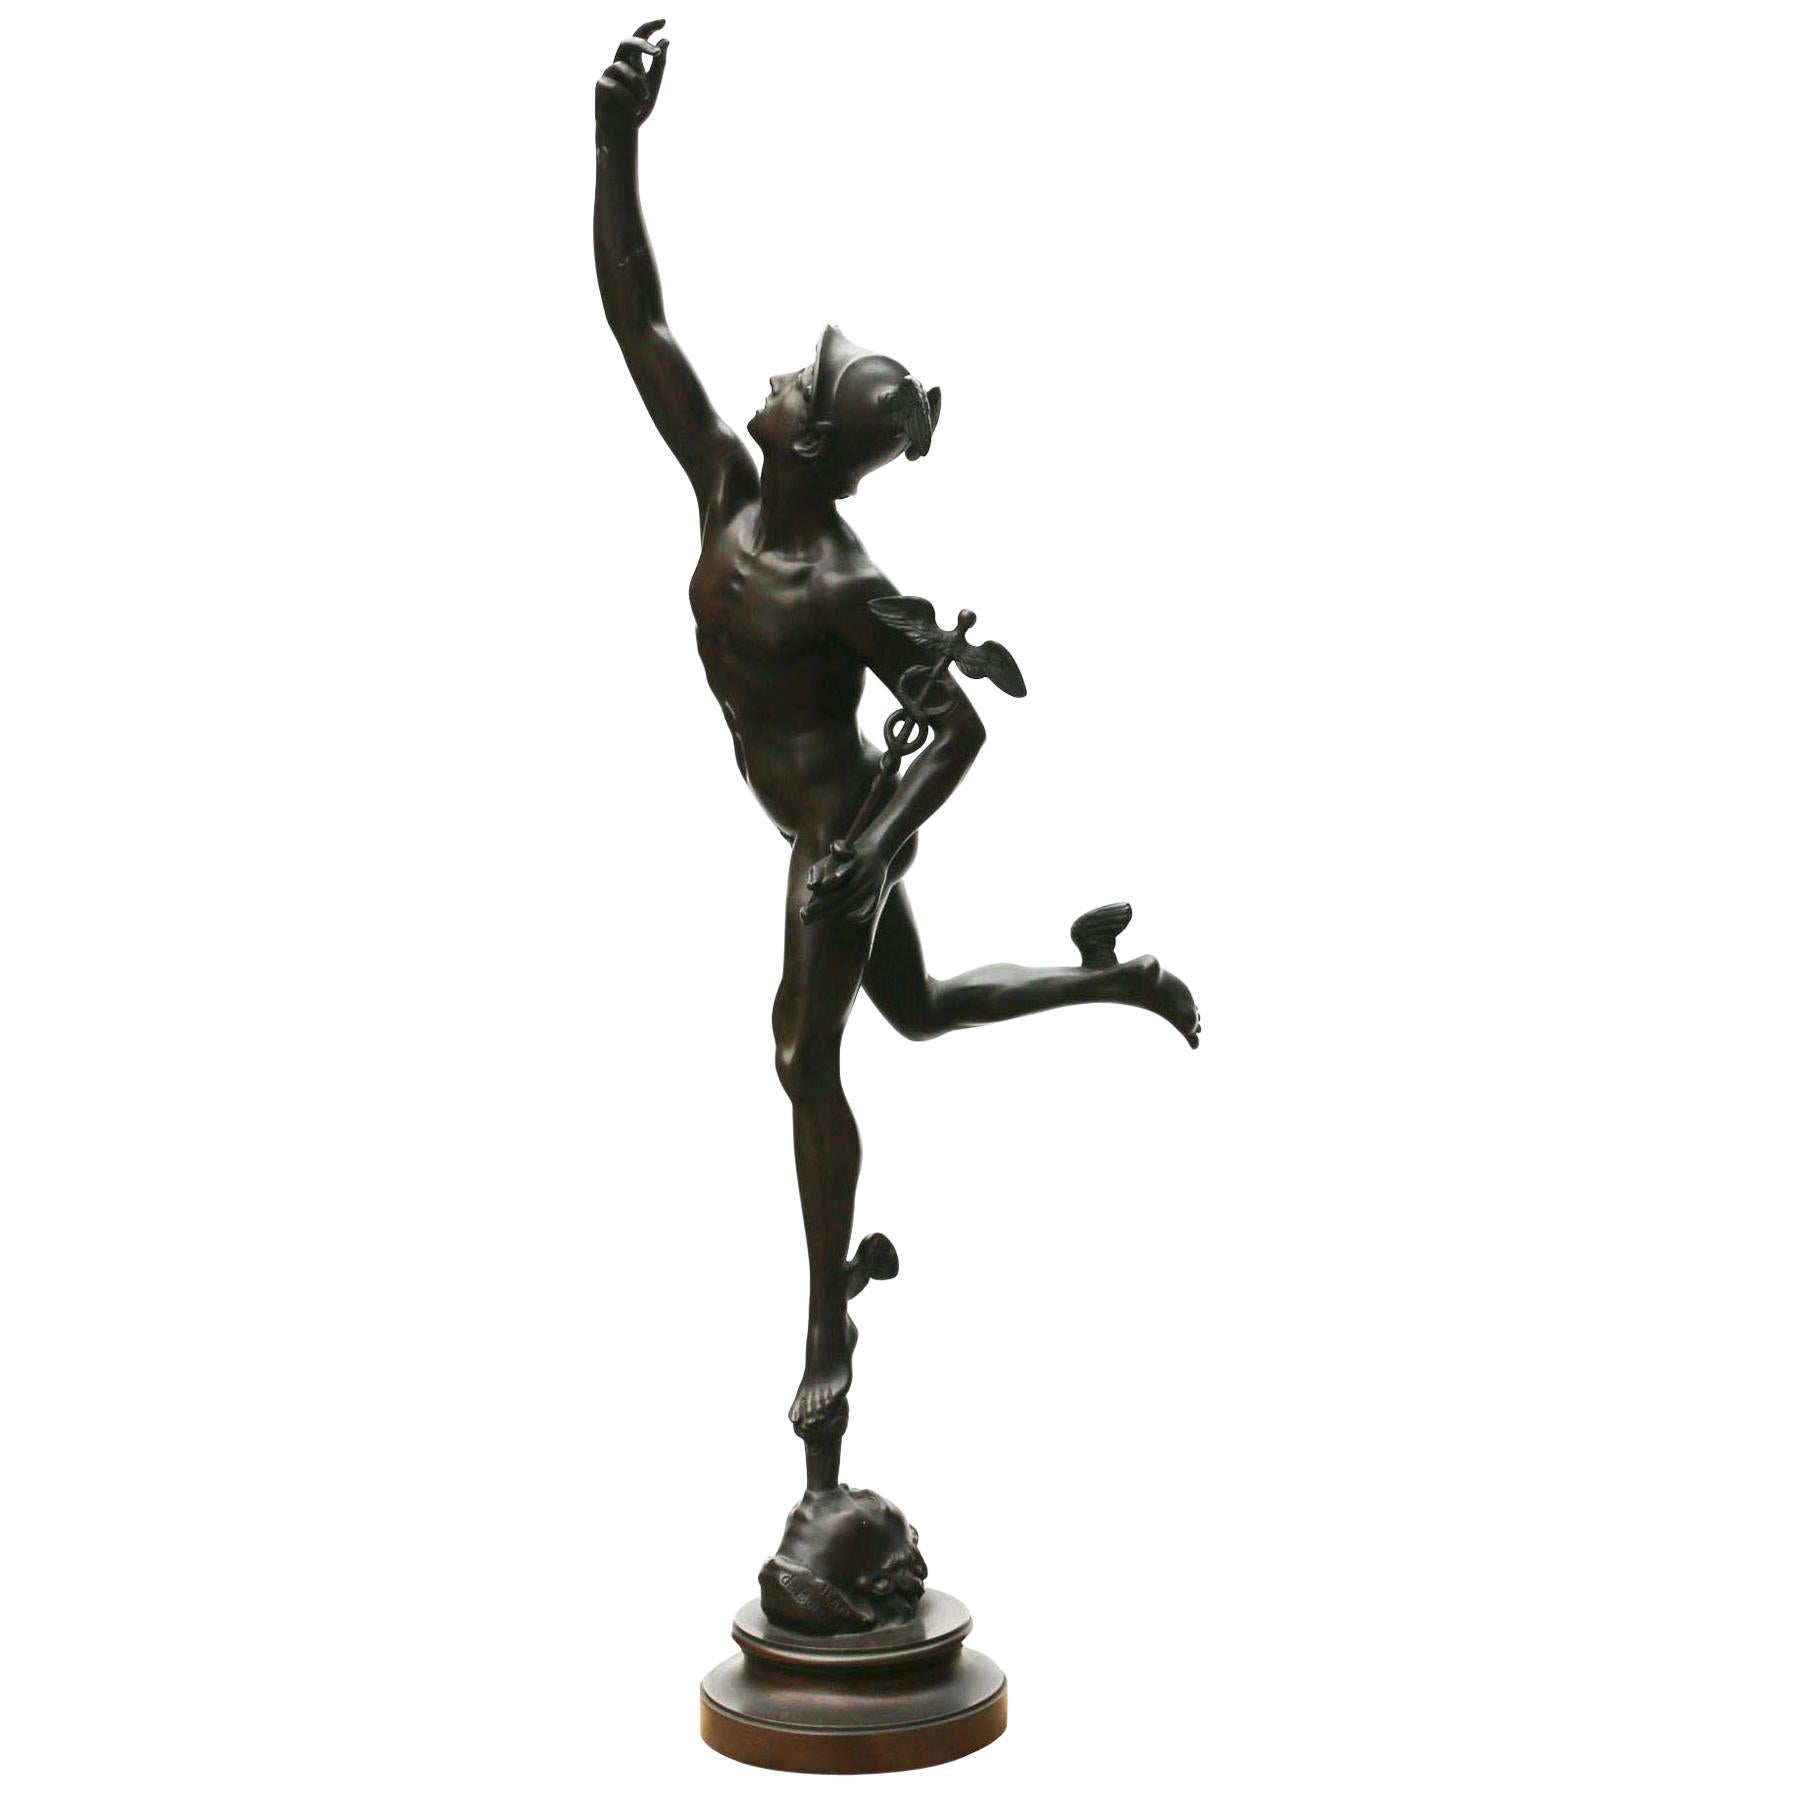 After Giambologna, a Bronze Figure of Mercury